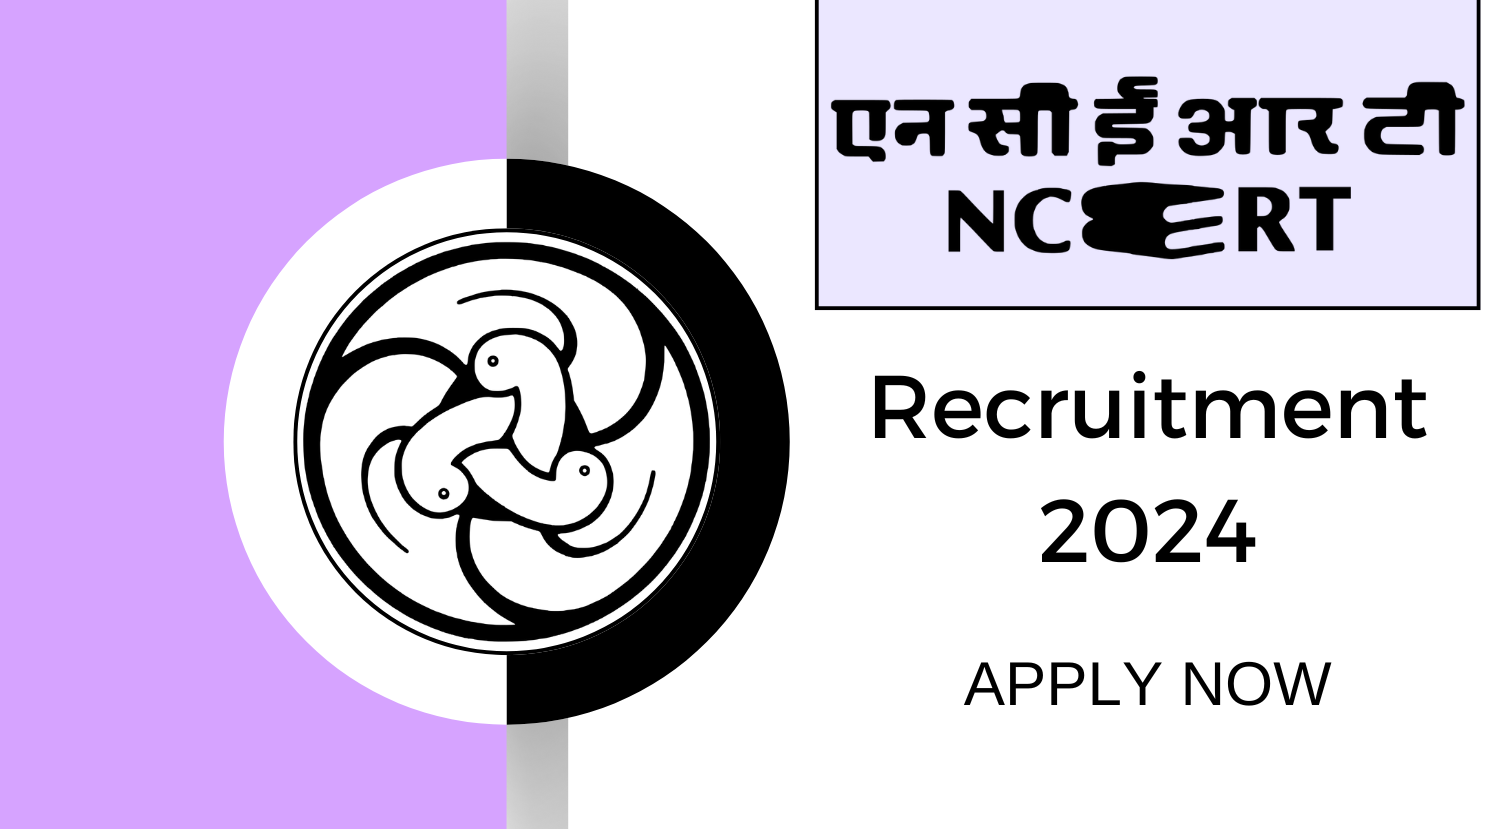 NCERT Recruitment 2024 Notification for Various Vacancies